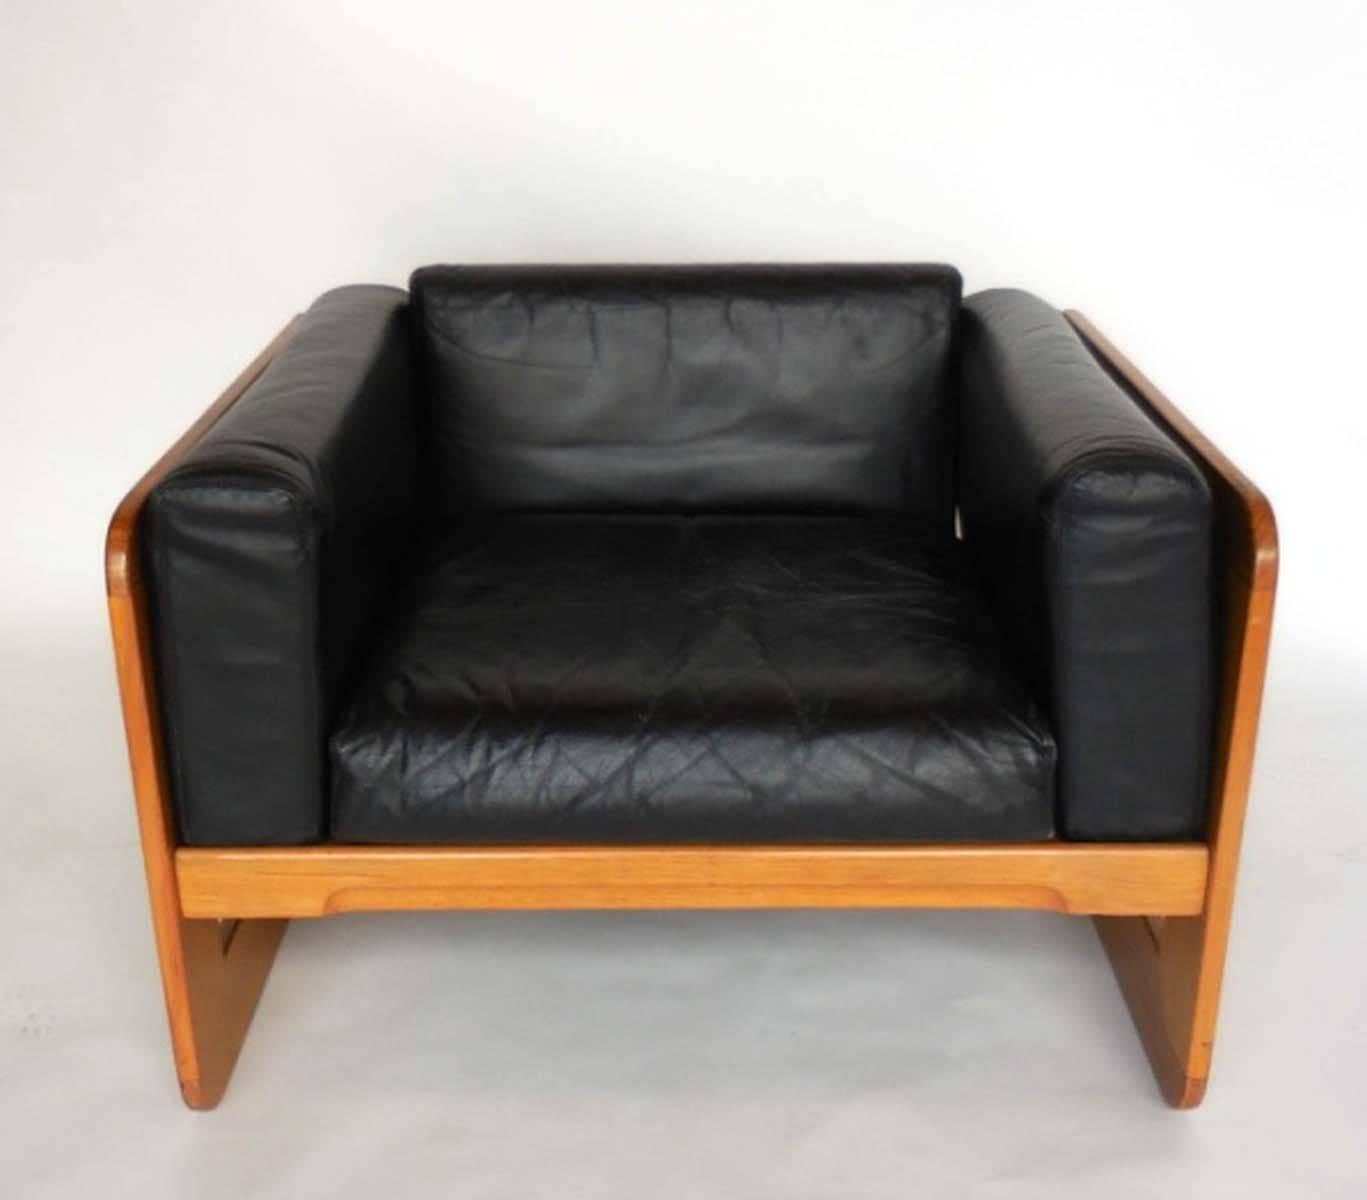 20th Century Giuseppe Raimondi Leather Sofa and Chair